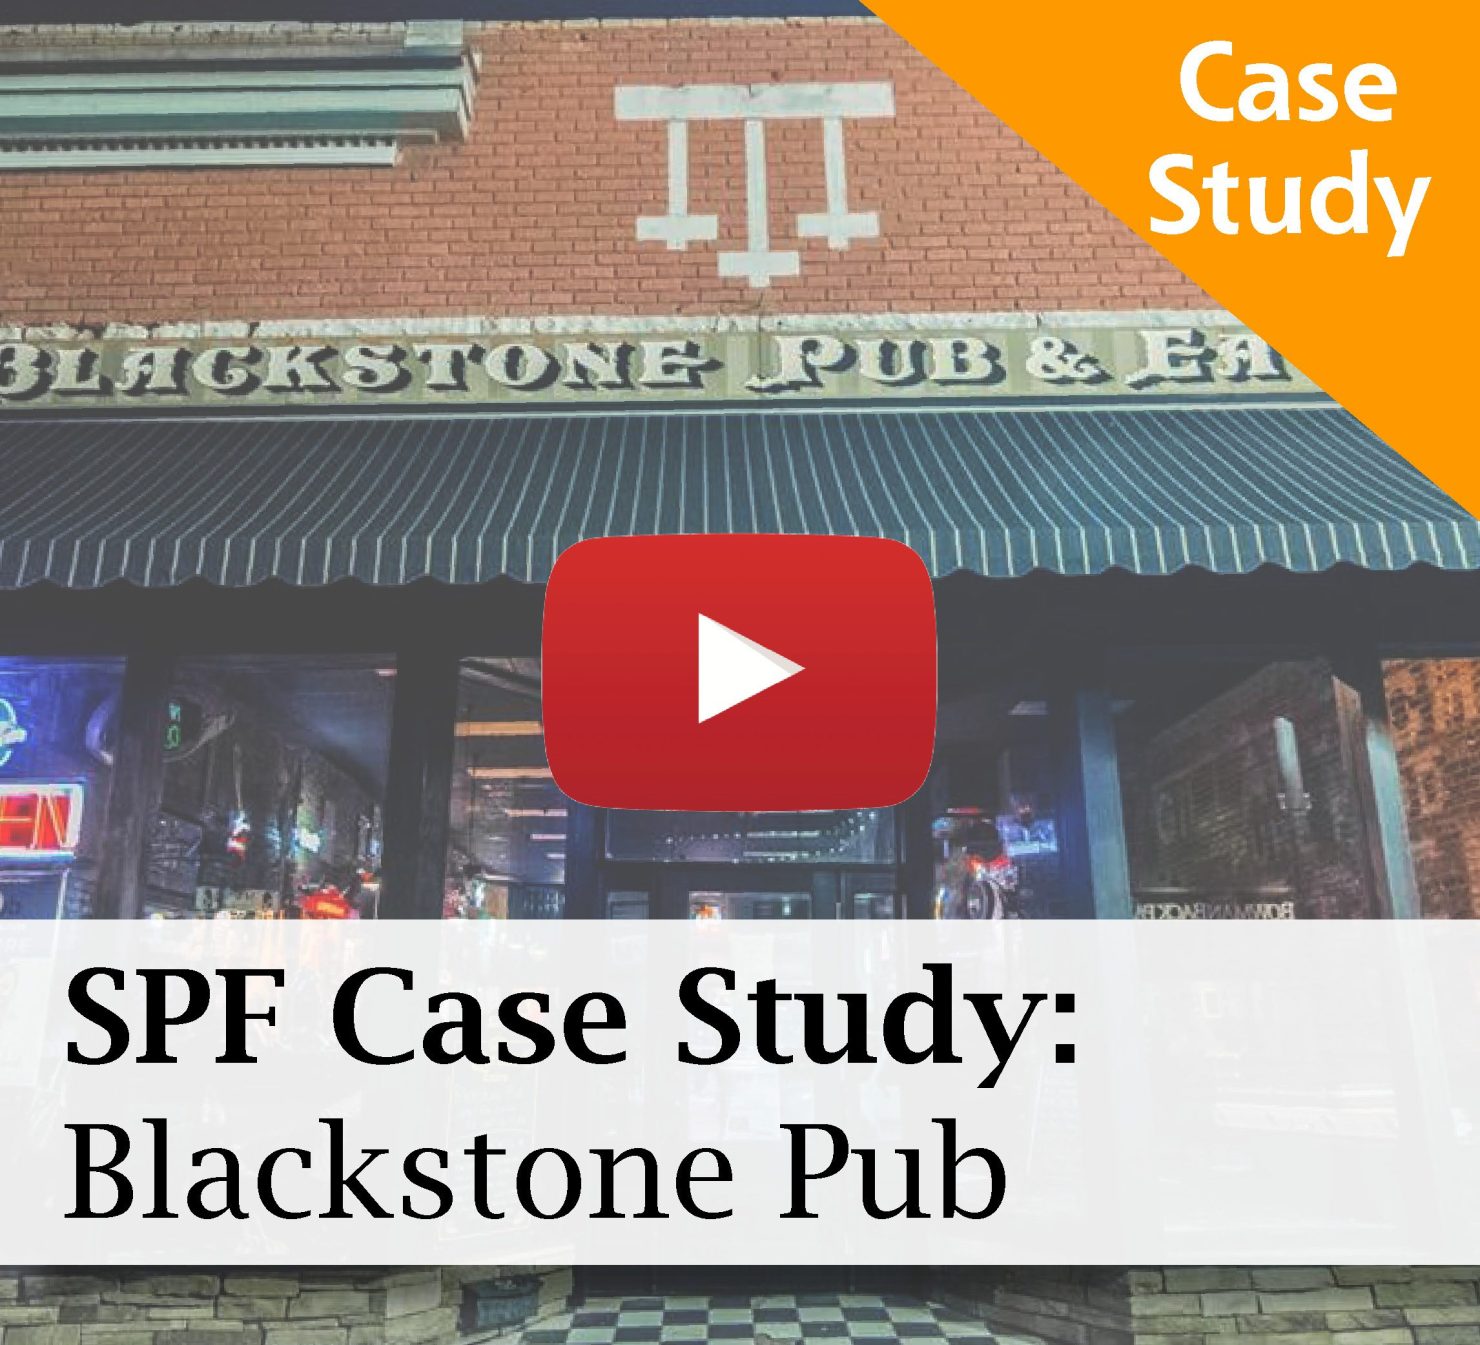 Blackstone Pub Roofing Case Study